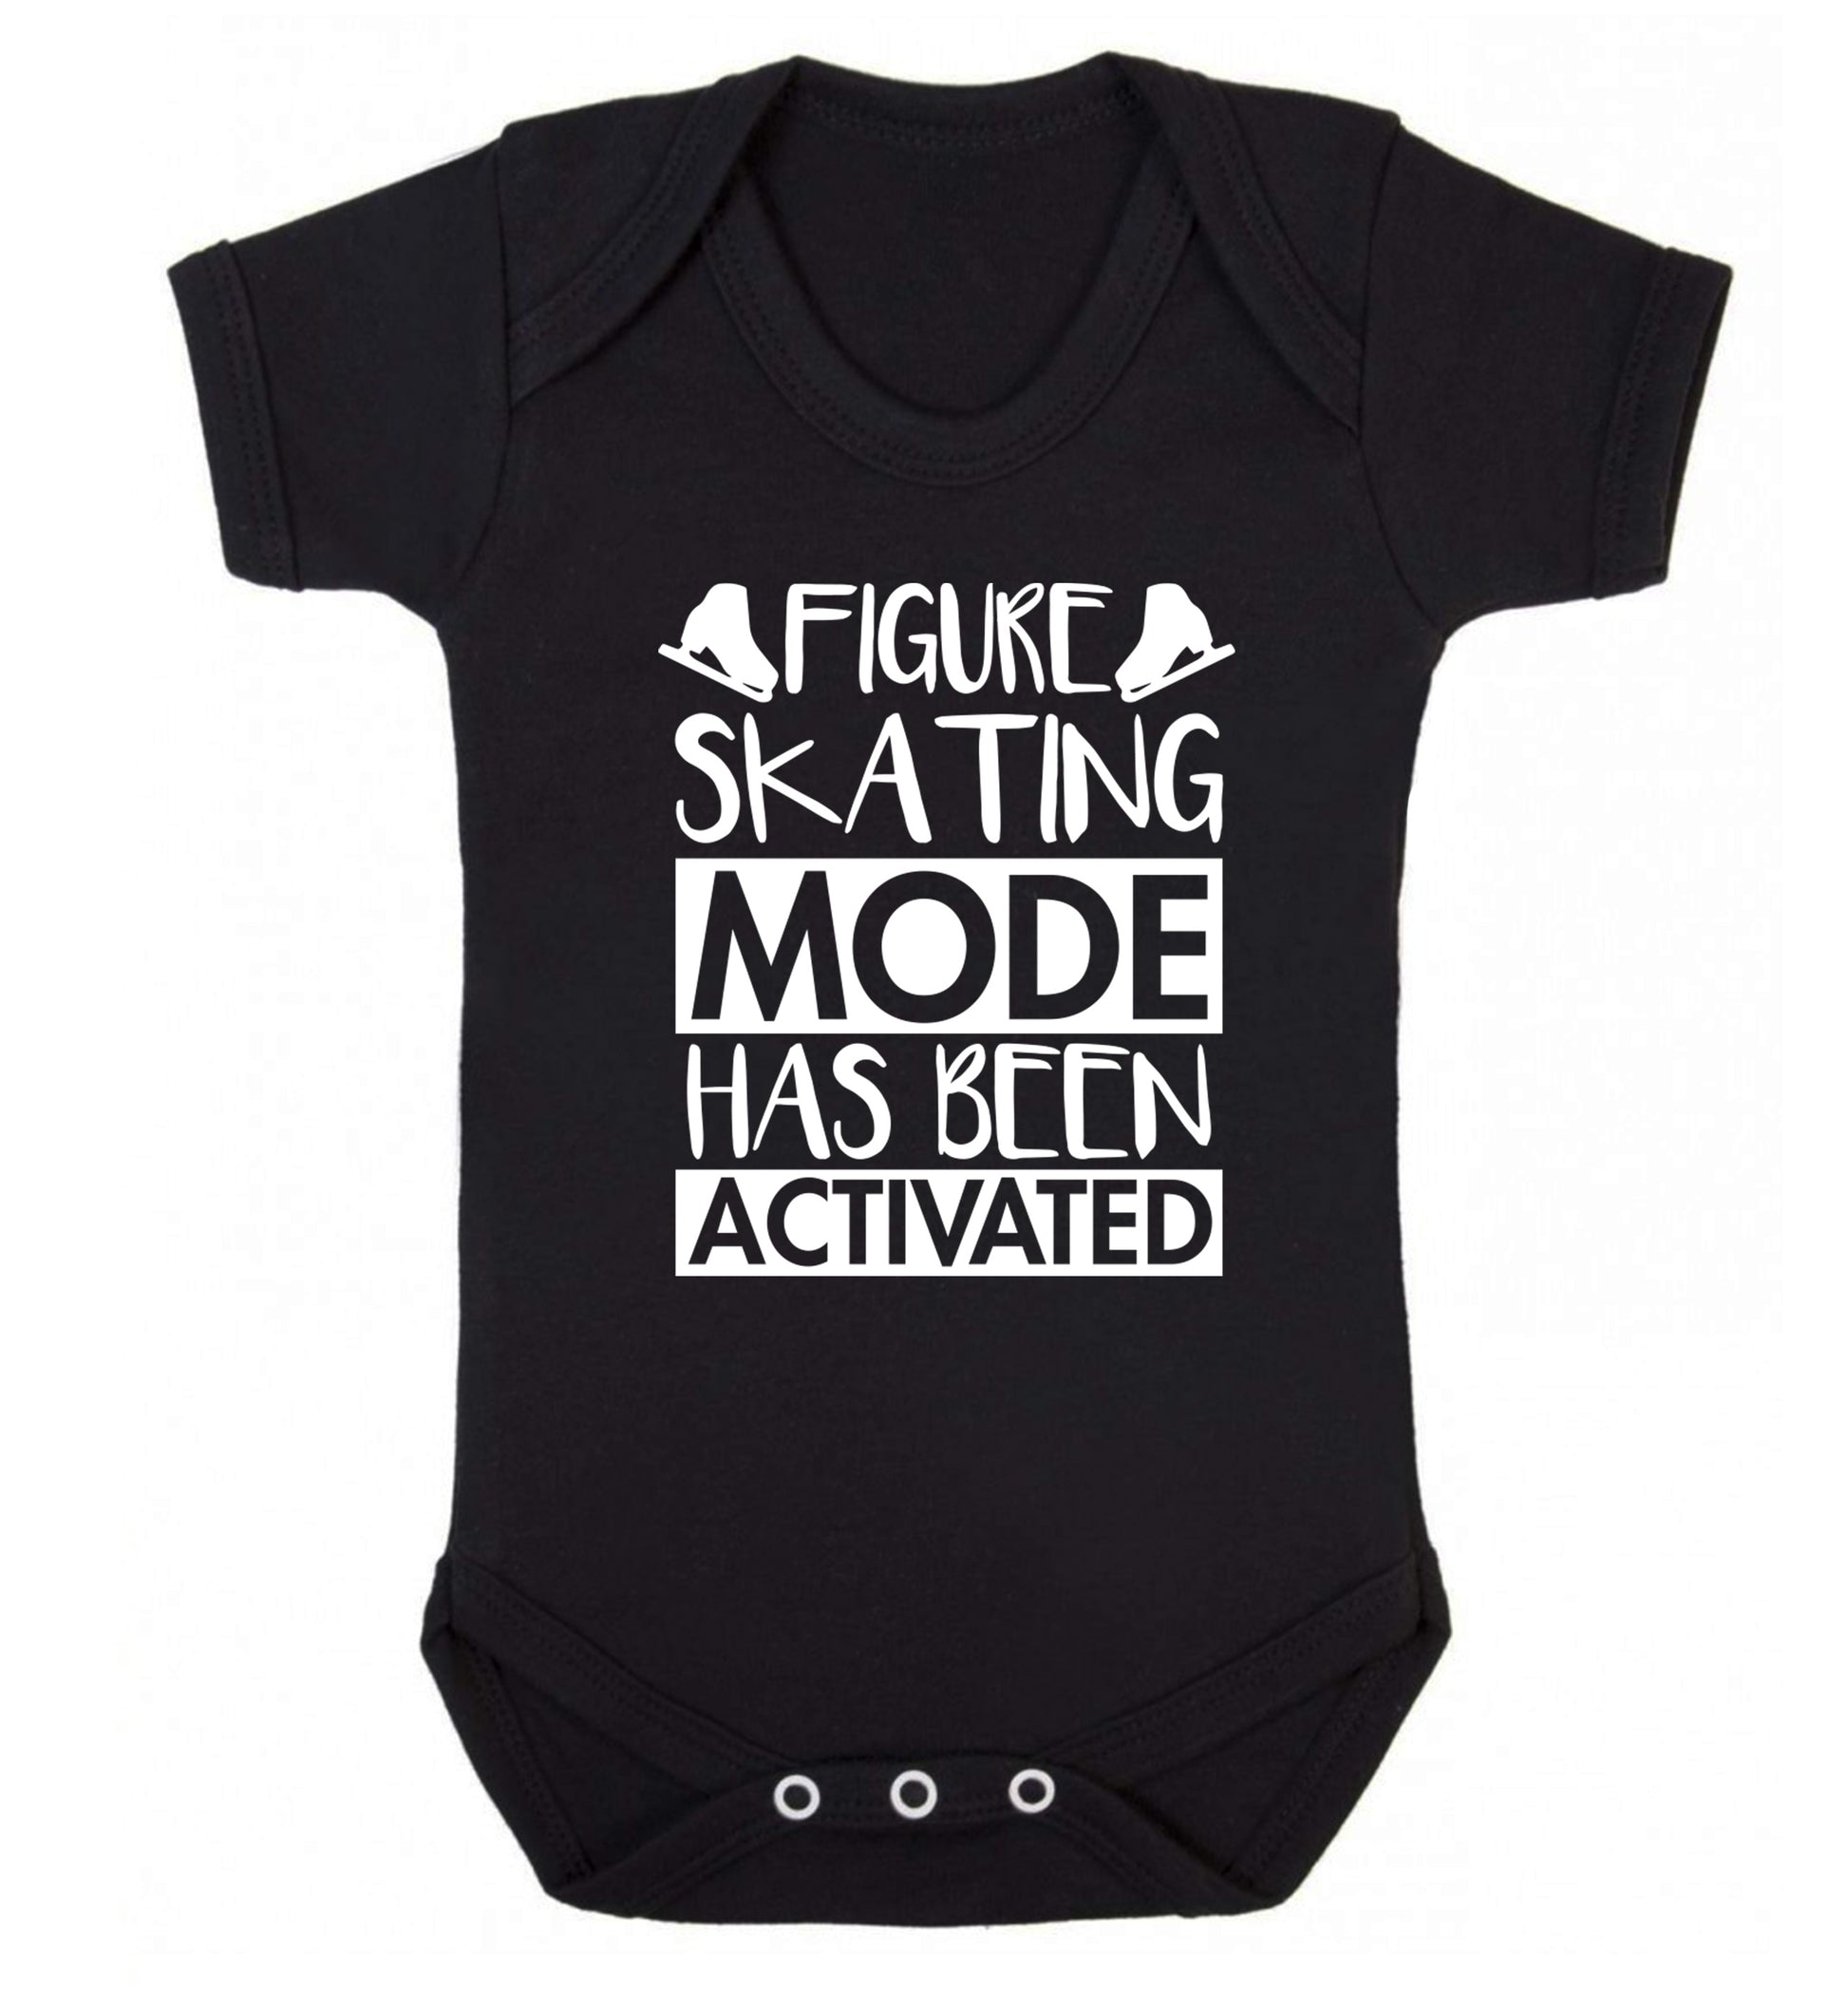 Figure skating mode activated Baby Vest black 18-24 months